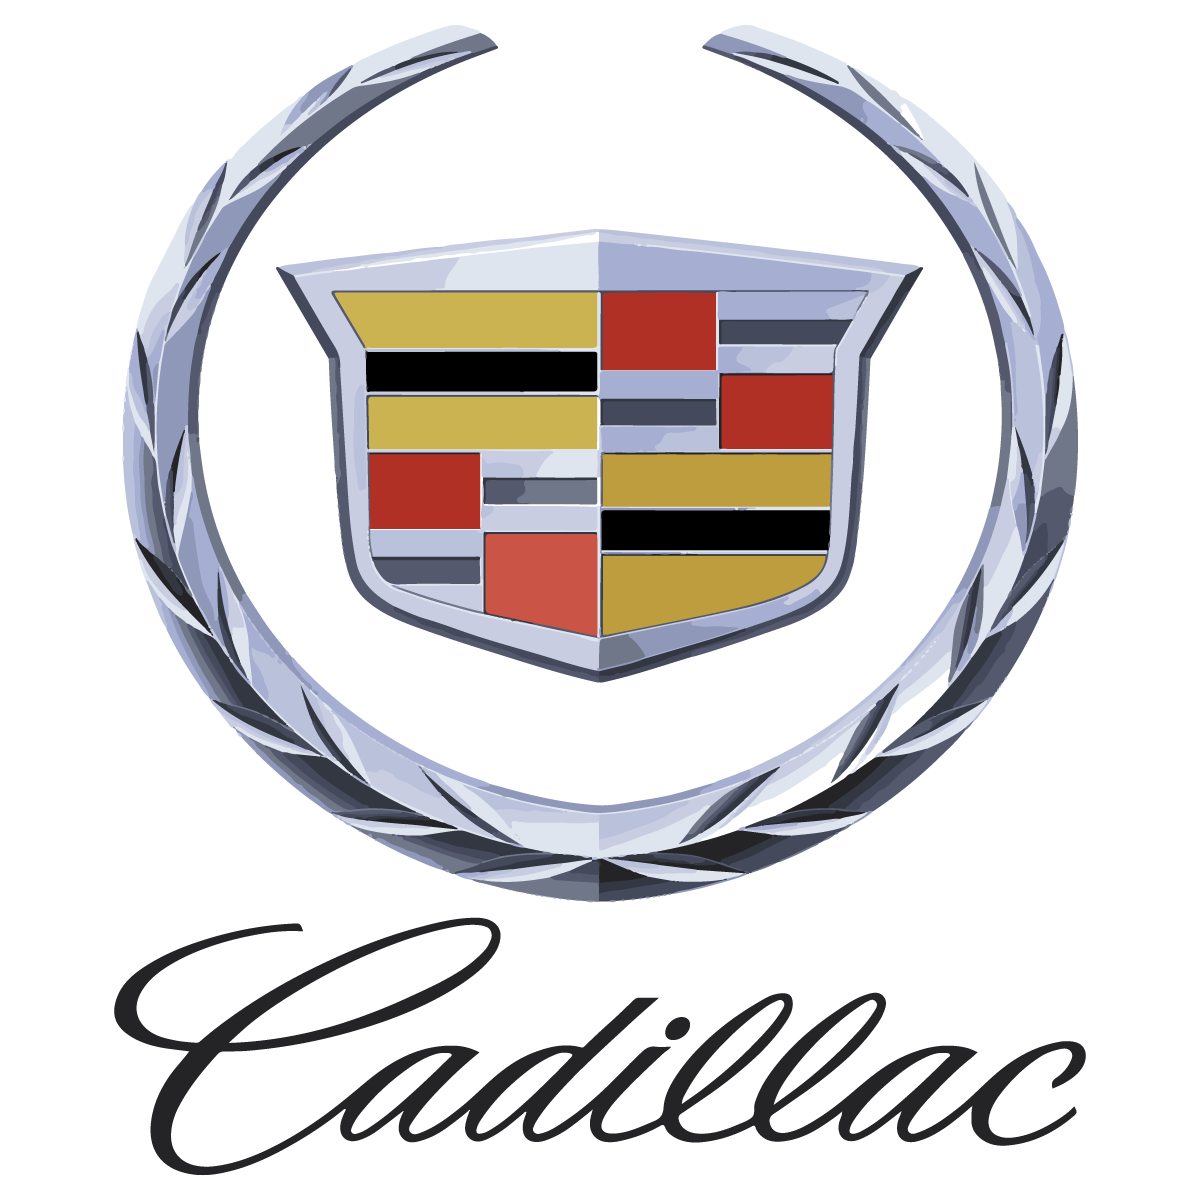 Кадиллак логотип. Марка автомобиля Кадиллак лого. Значок автомобиля Cadillac. Значок Кадиллака и Джилли. Кадиллак Geely.